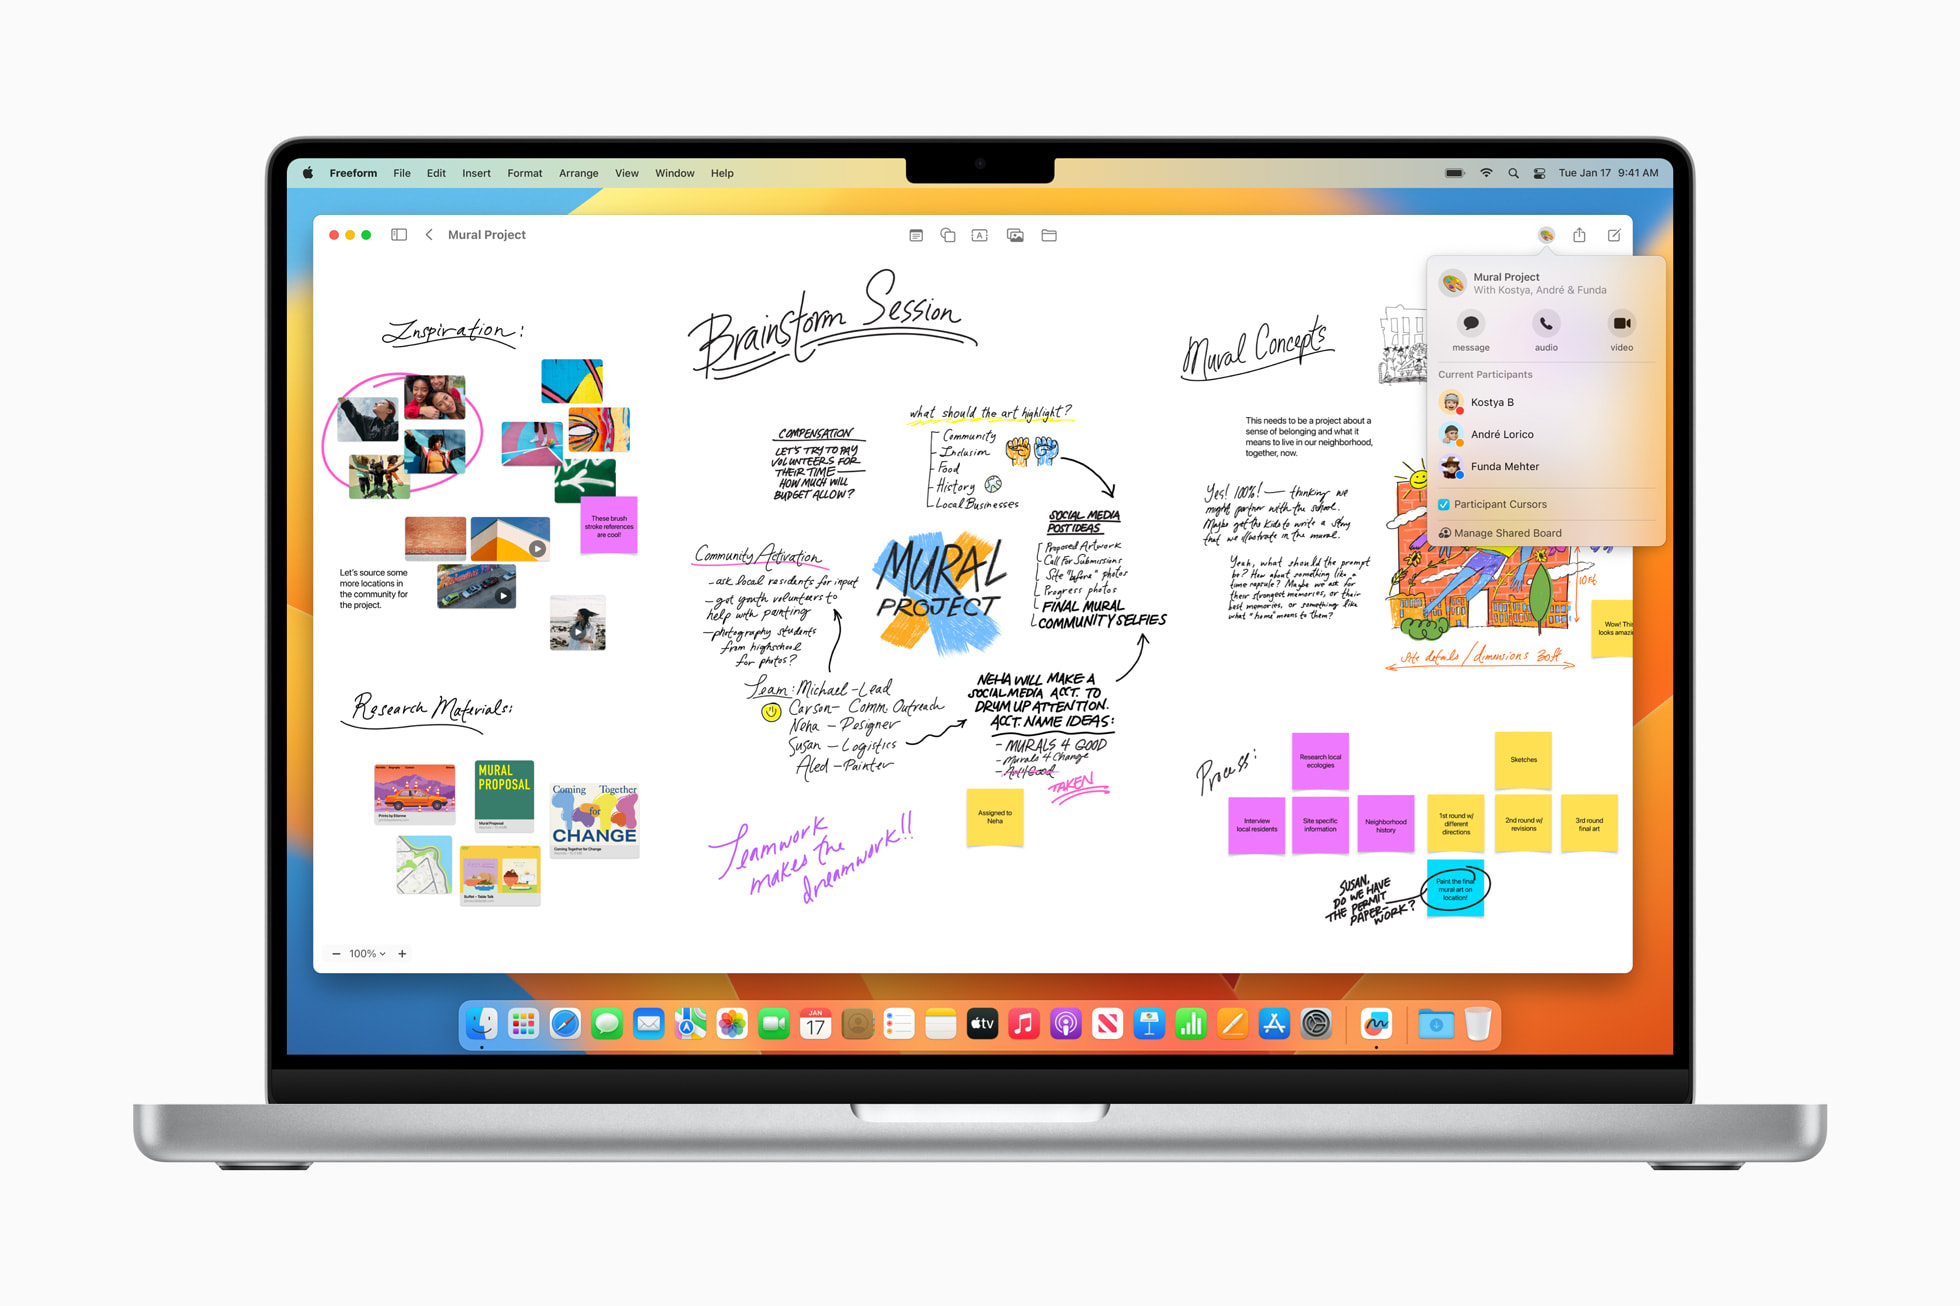 Freeform is shown in macOS Ventura on MacBook Pro.